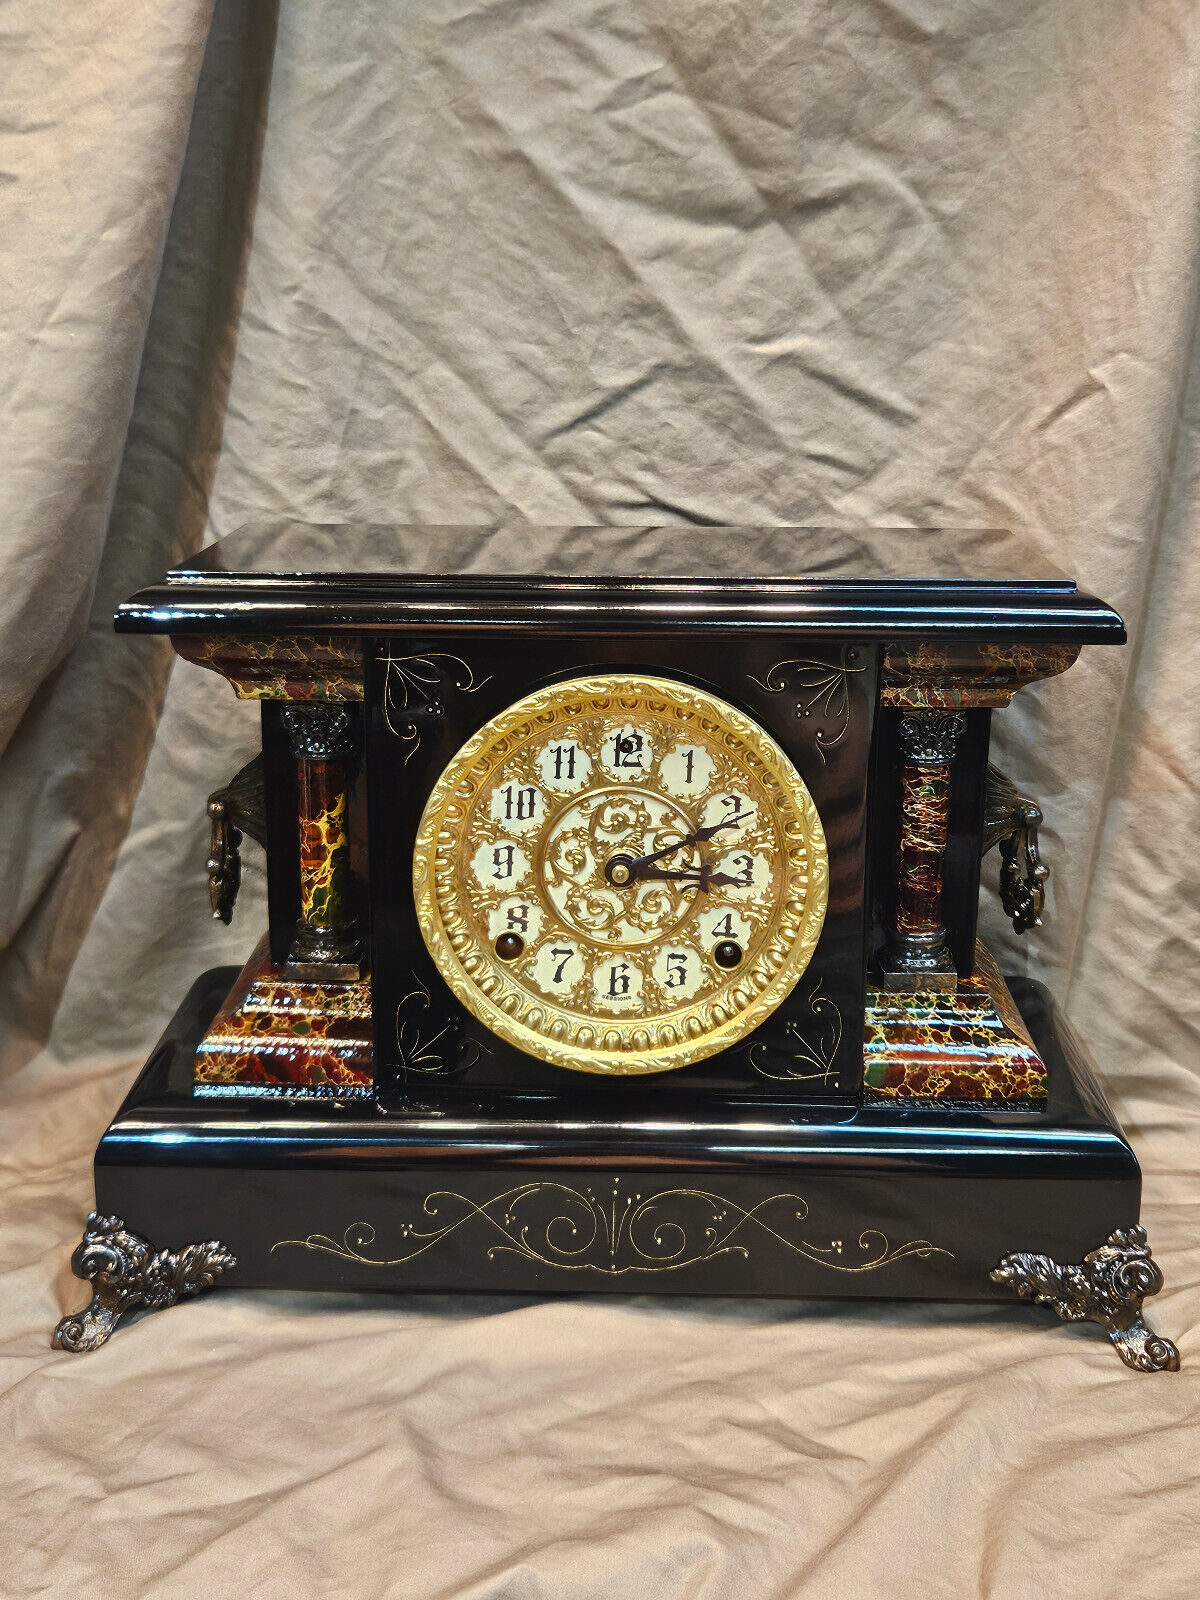 Restored Antique Sessions Mantel Clock circa 1903 Original Movement